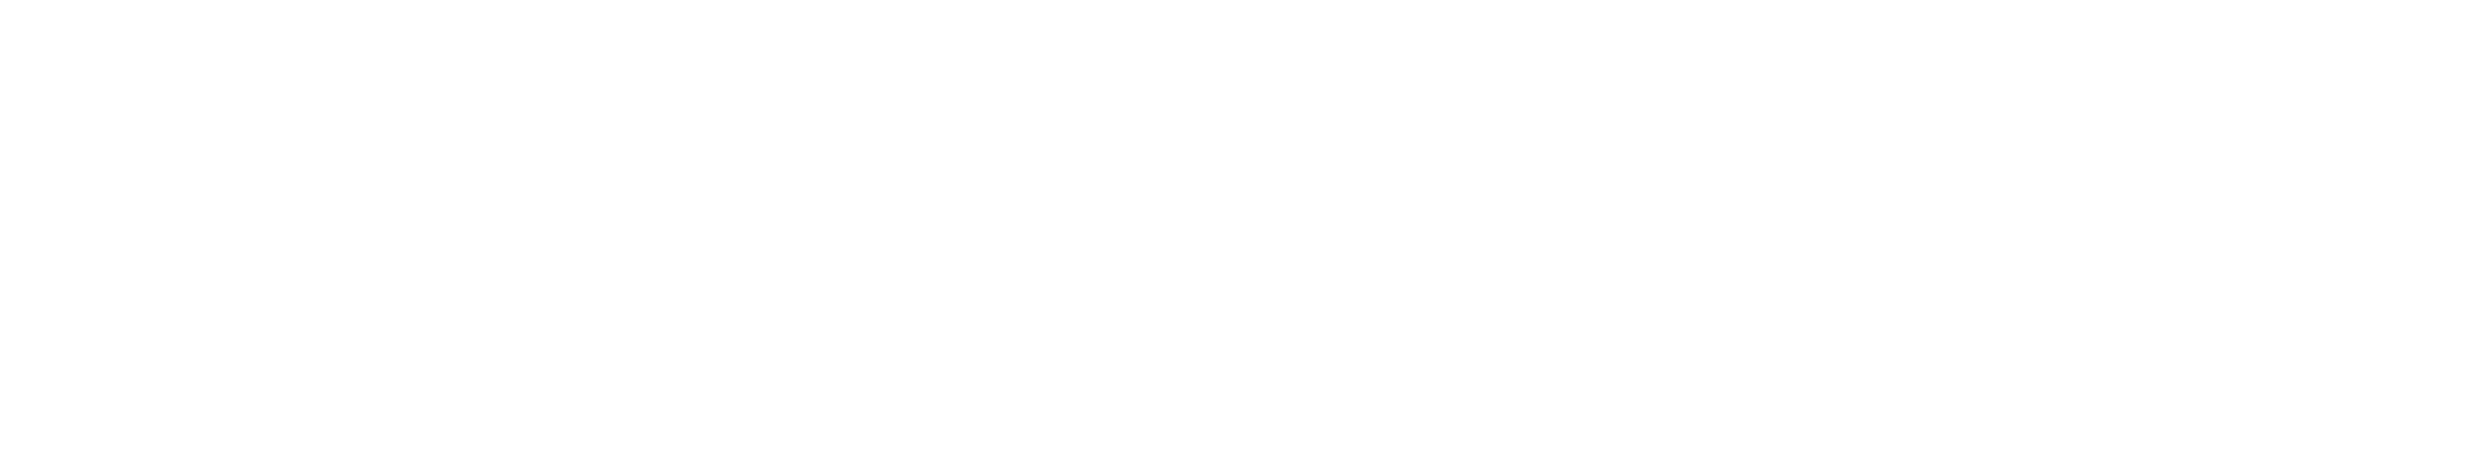 FST Media - where the market meets reverse logo in white